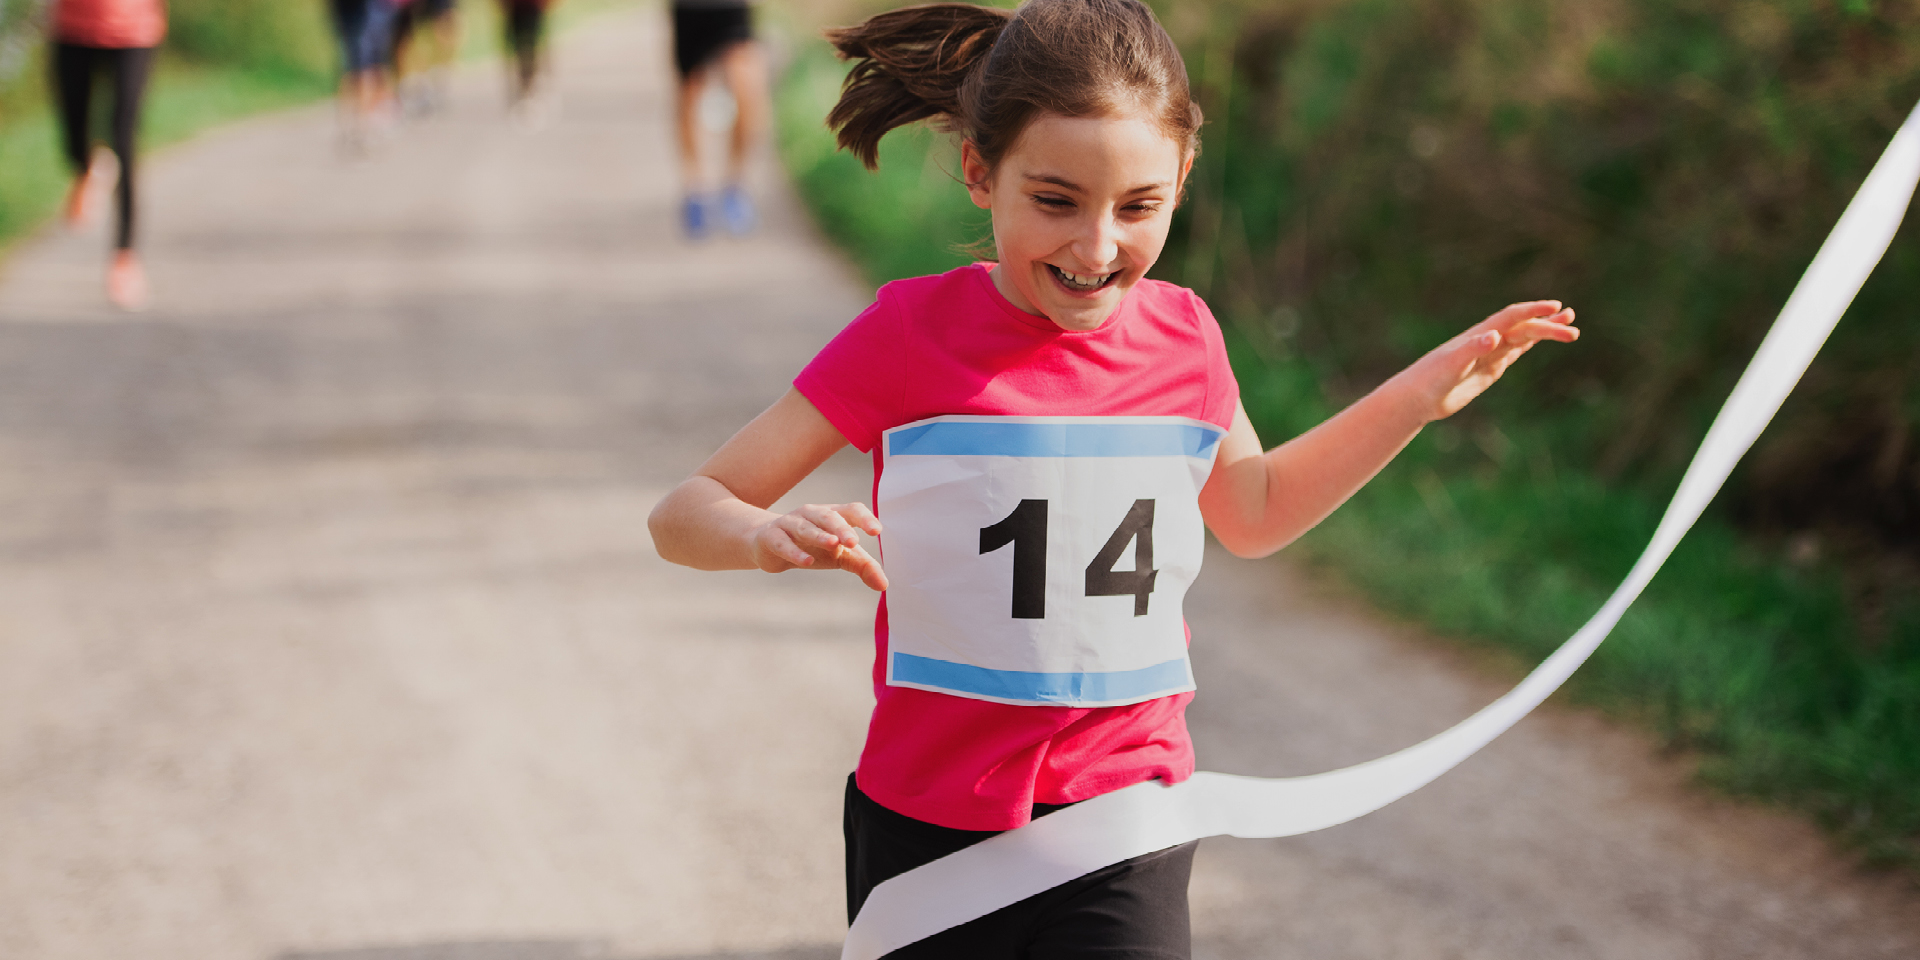 young girl reaching finish line